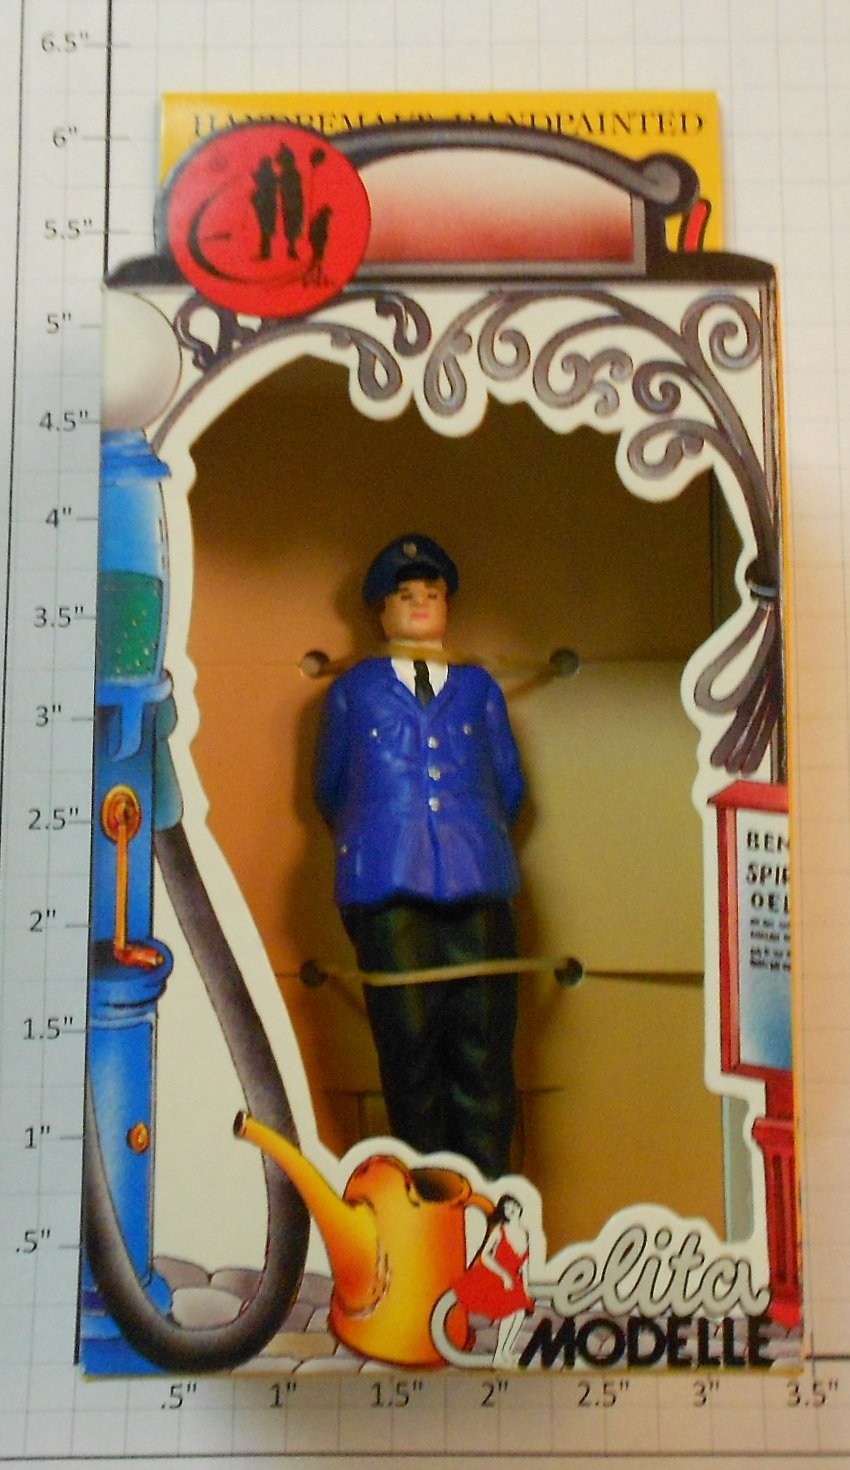 Elita Modelle 10029 Police figure